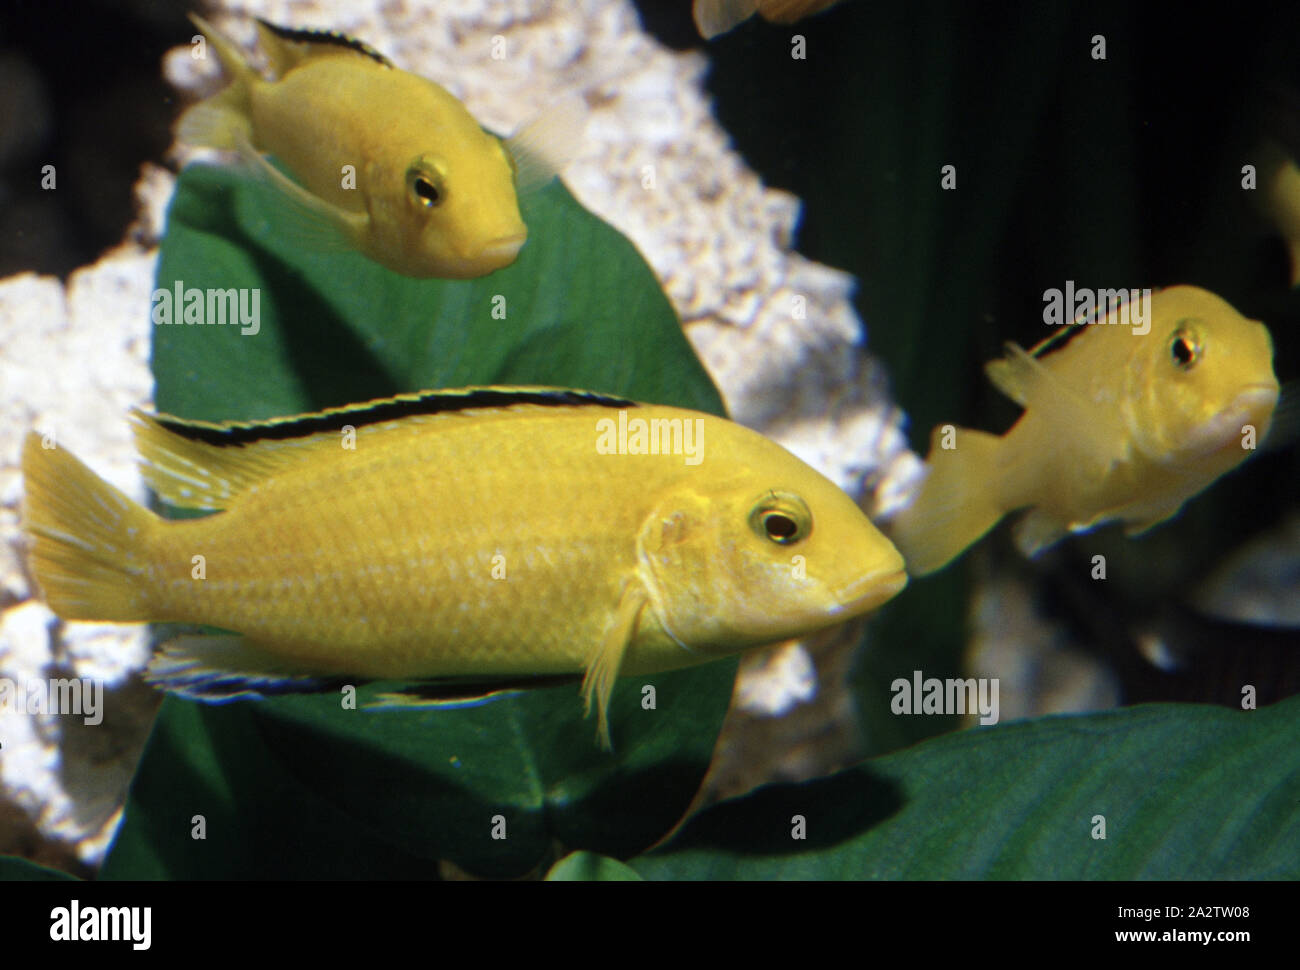 Lemon yellow labidochromis, Labidochromis caeruleus Stock Photo